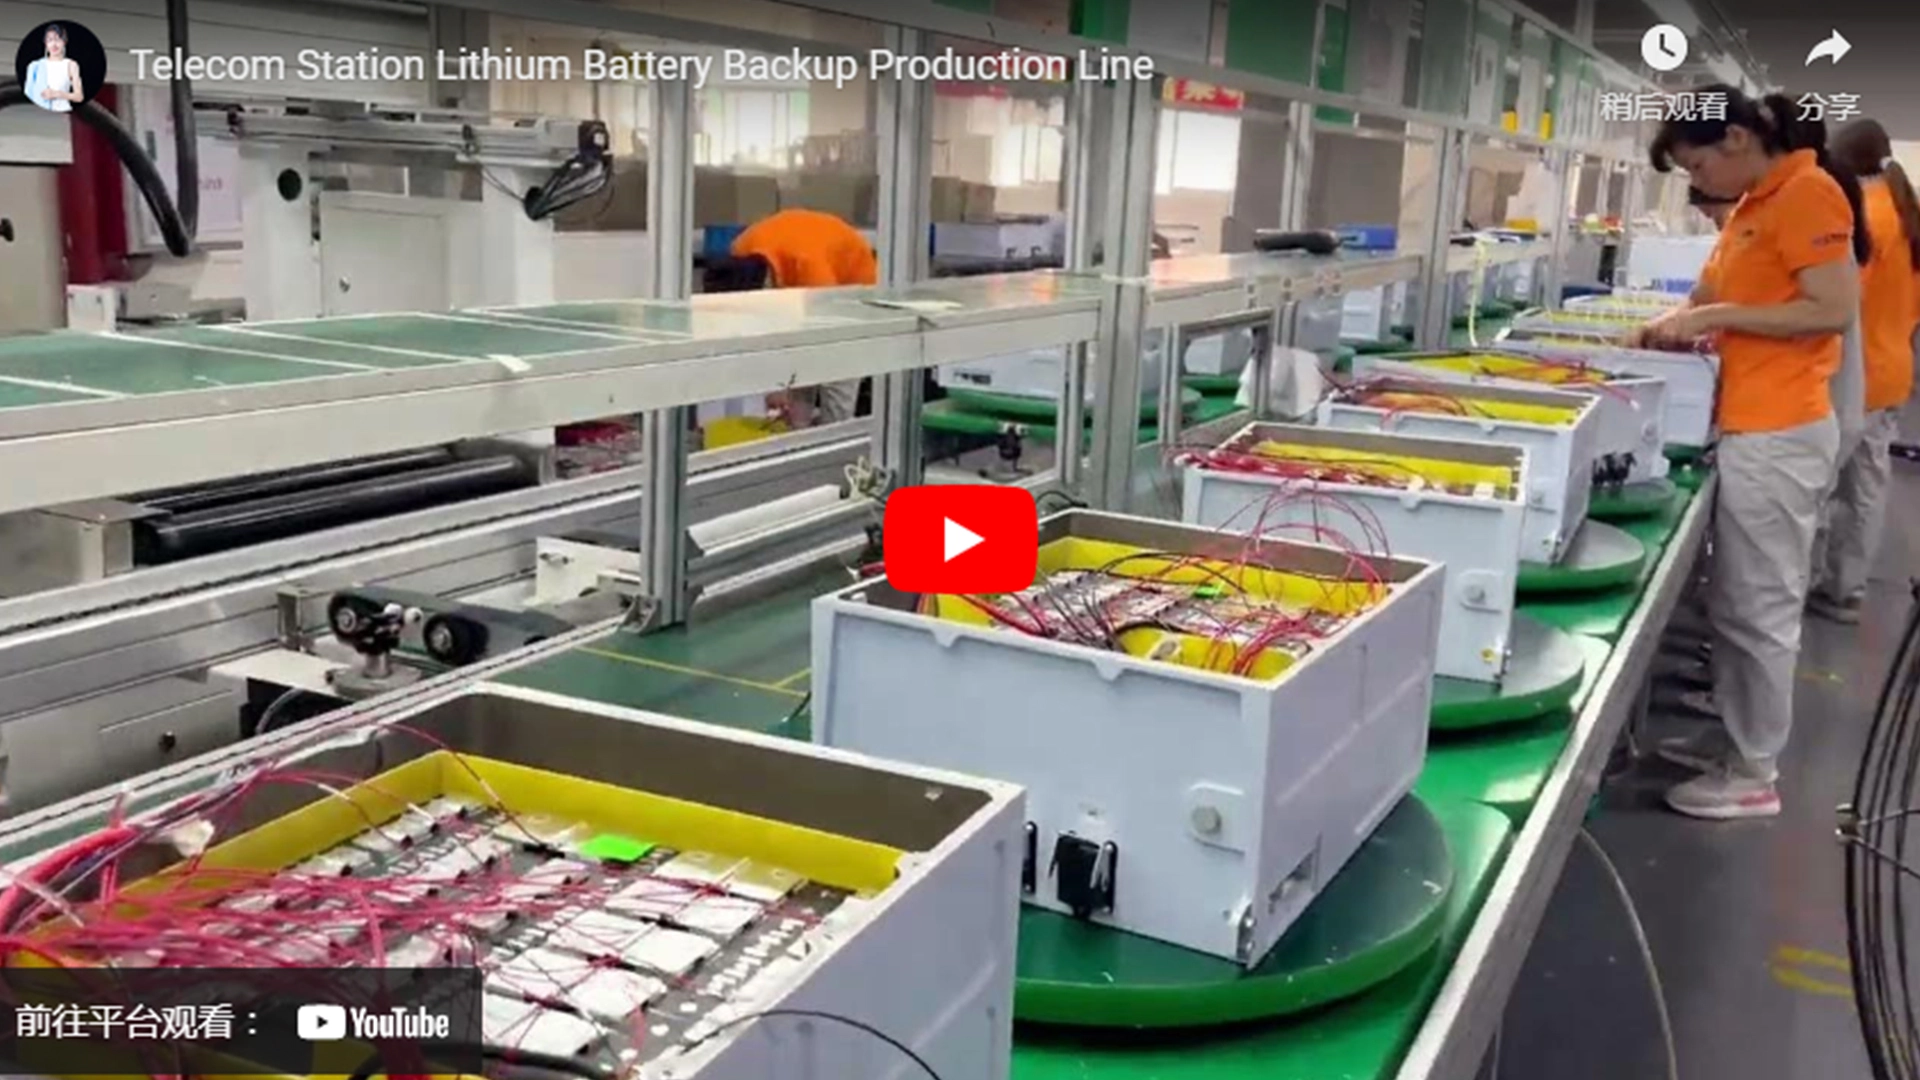 Telecom Station Lithium Battery Backup Production Line